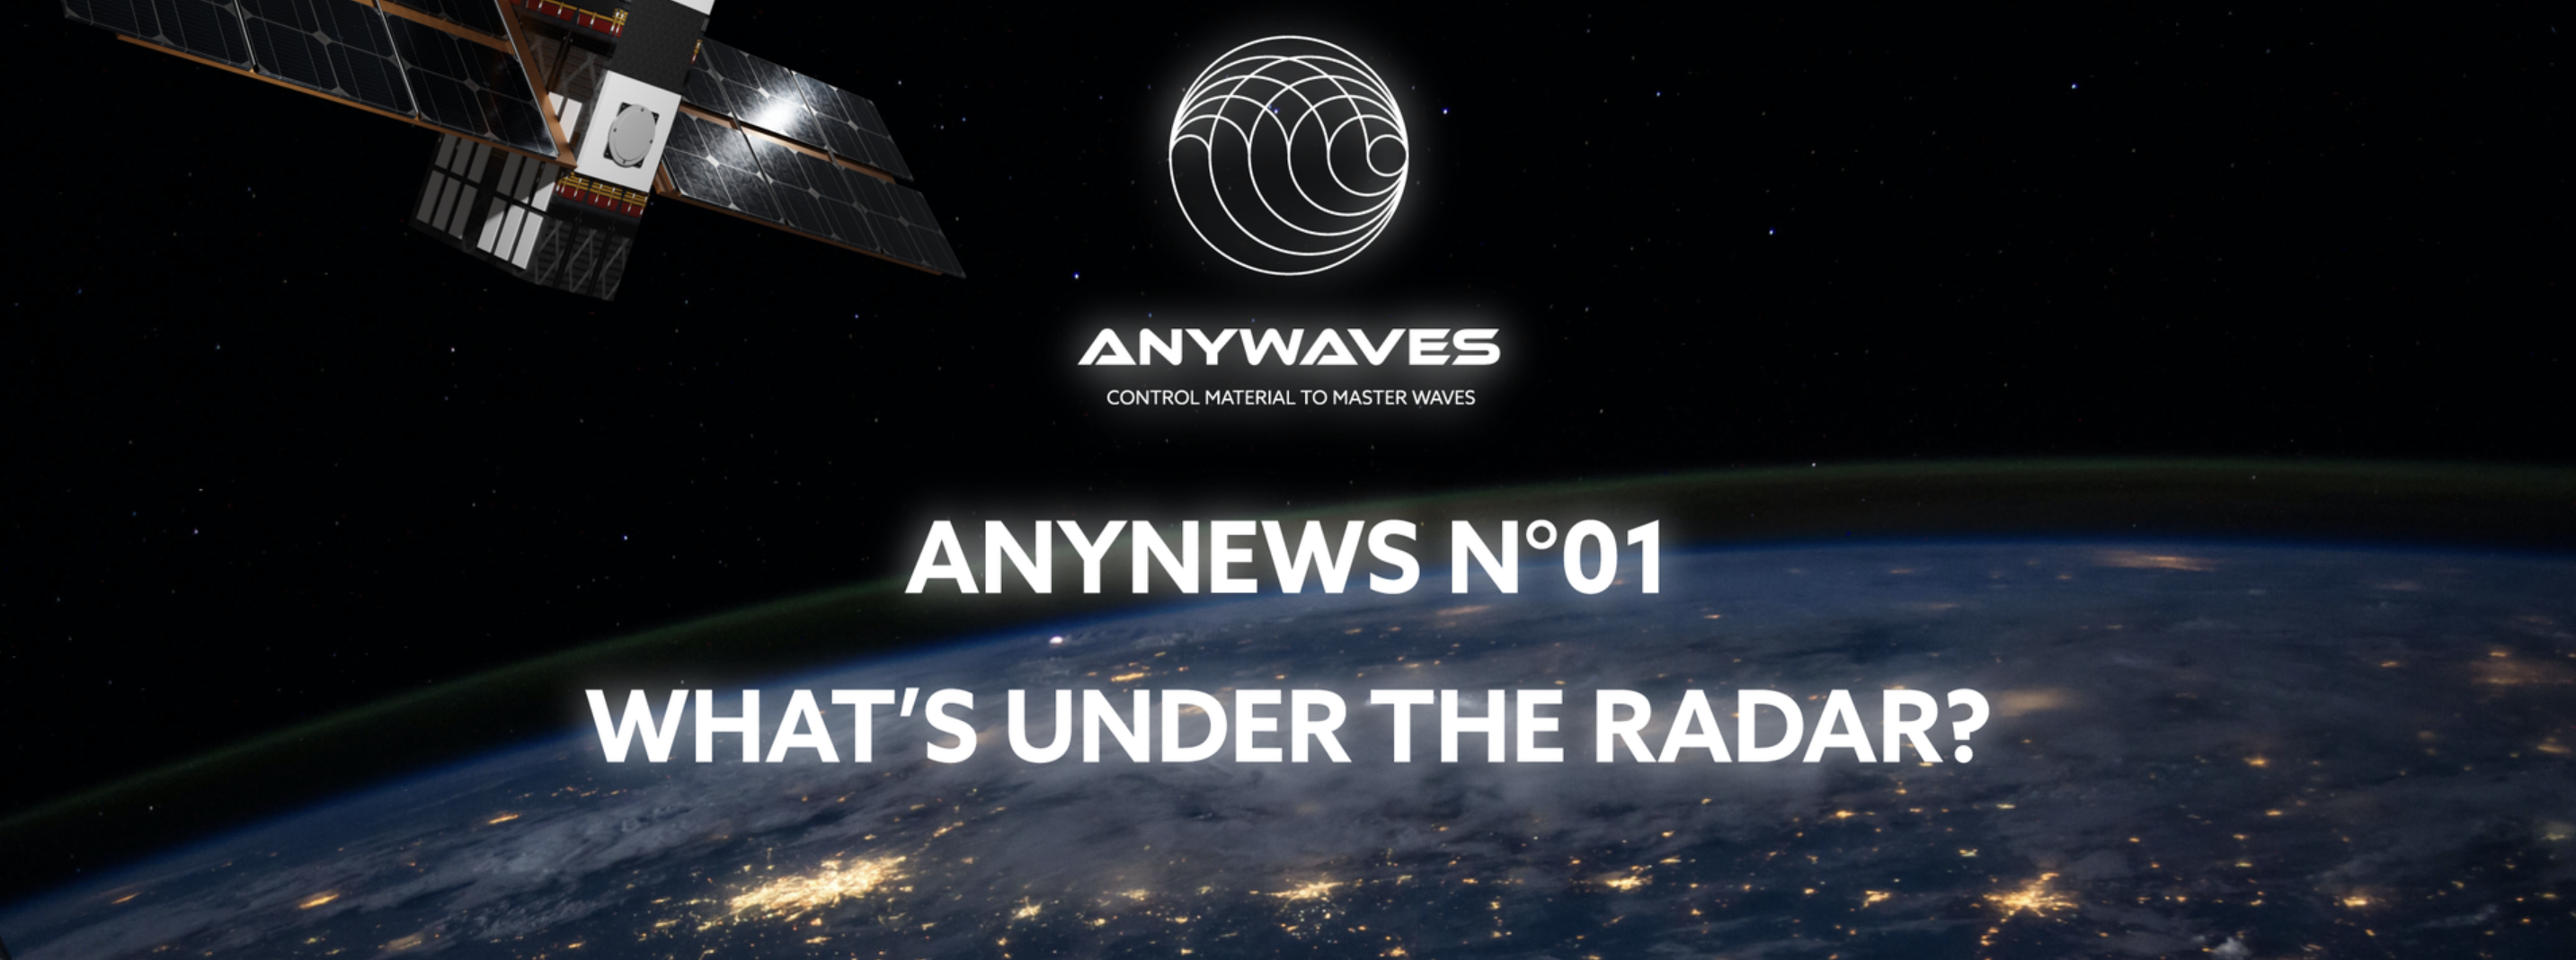 Anynews n°1 - What's Under the Radar?